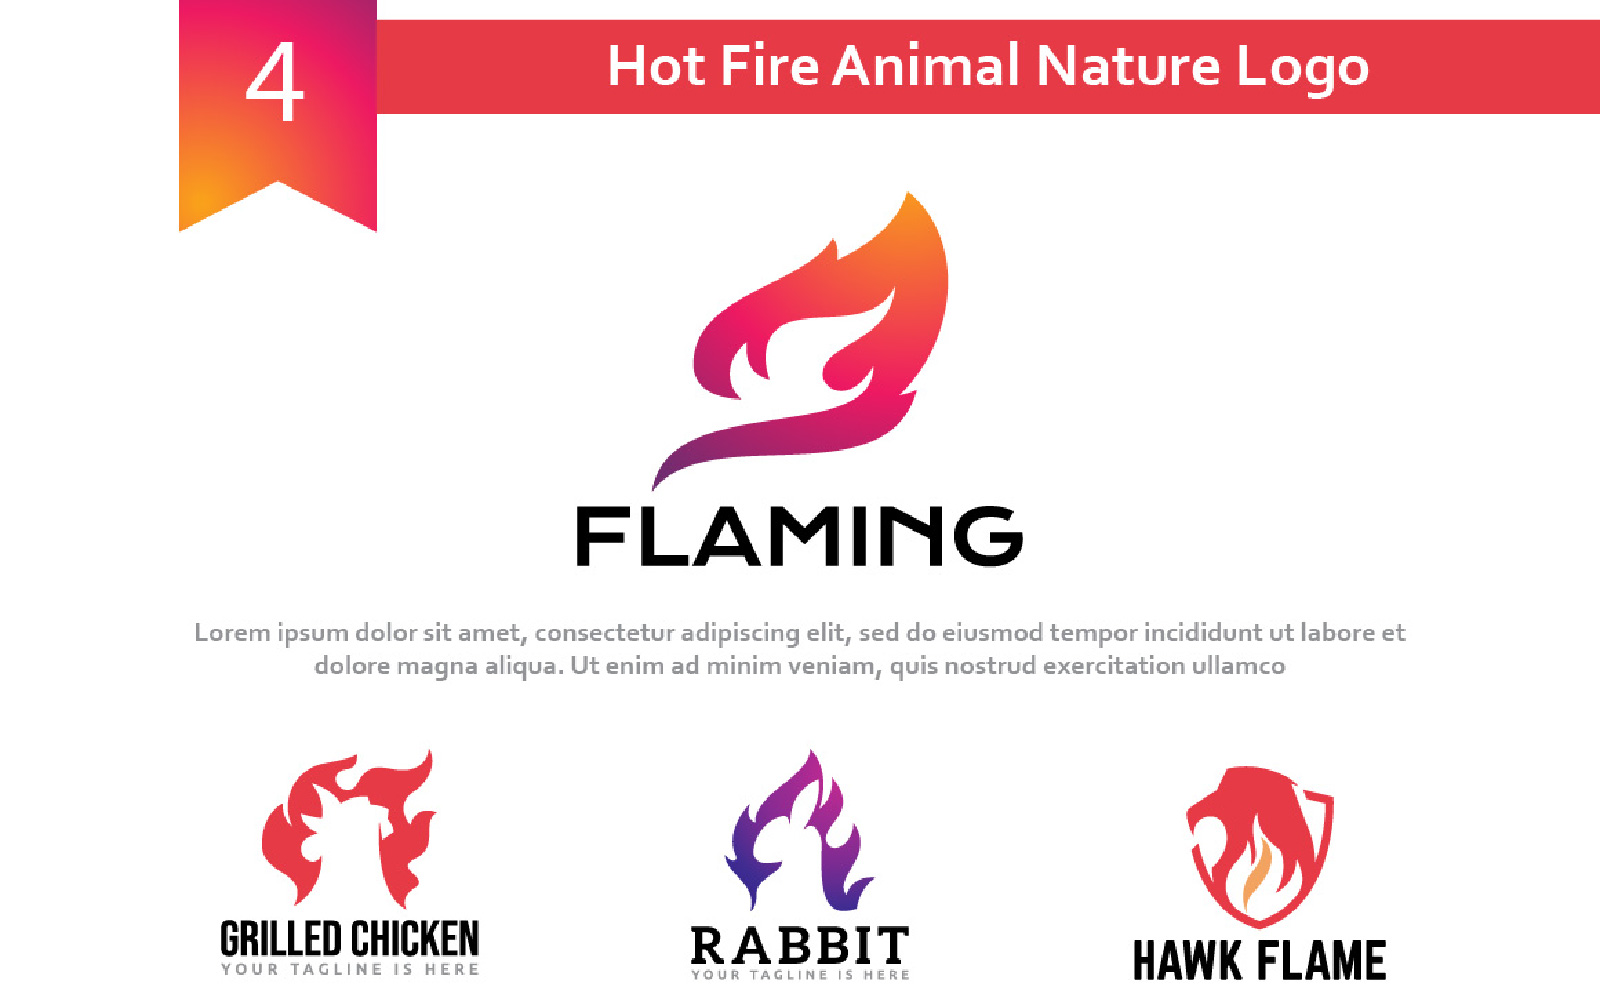 4 Hot Fire Animal Nature Logo